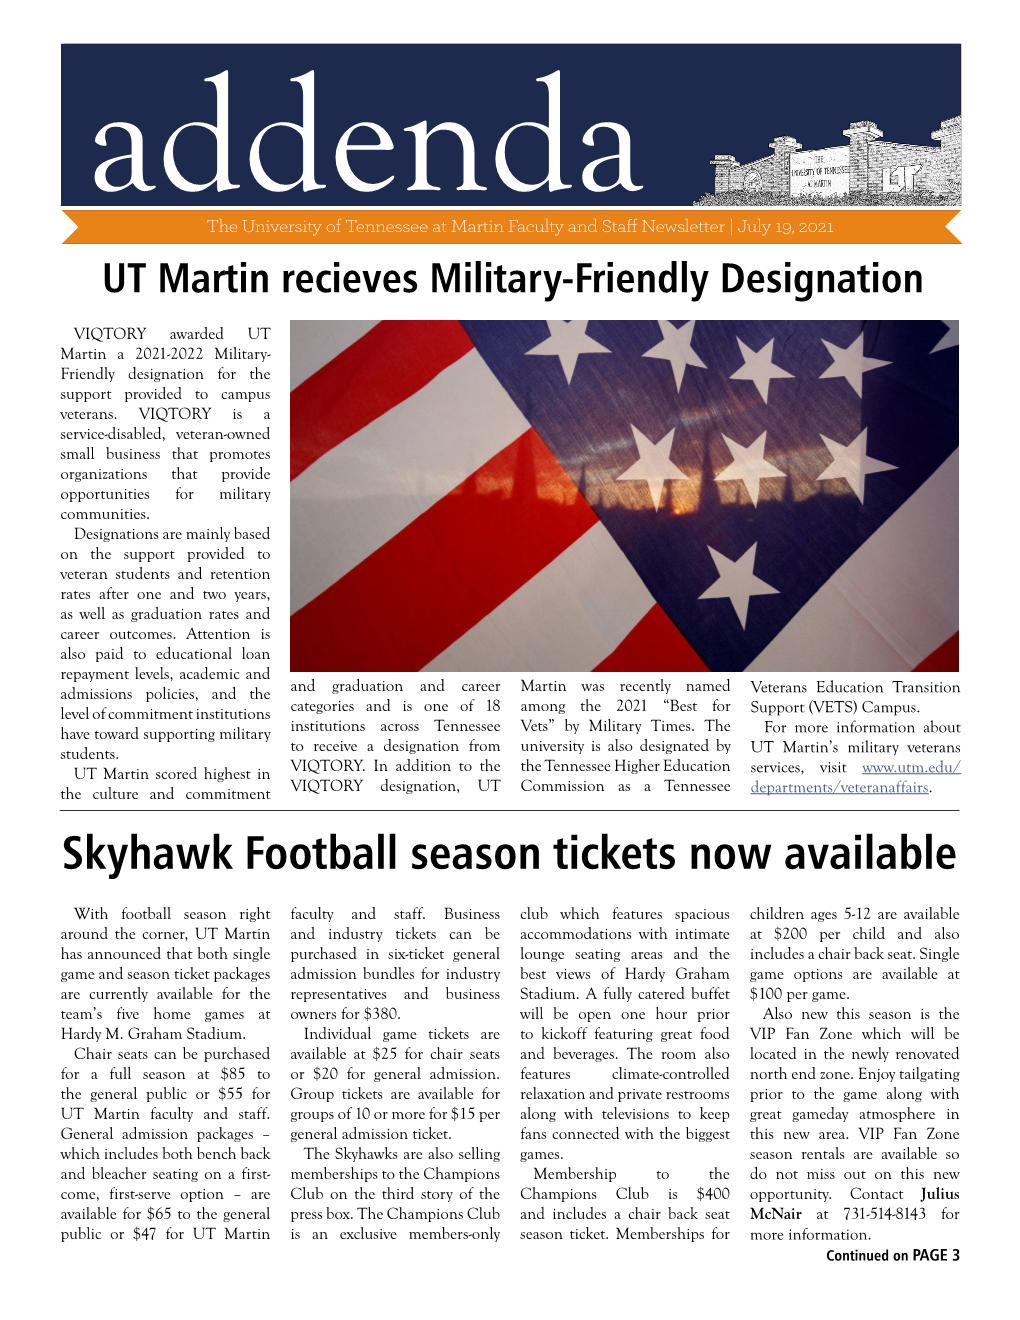 Skyhawk Football Season Tickets Now Available